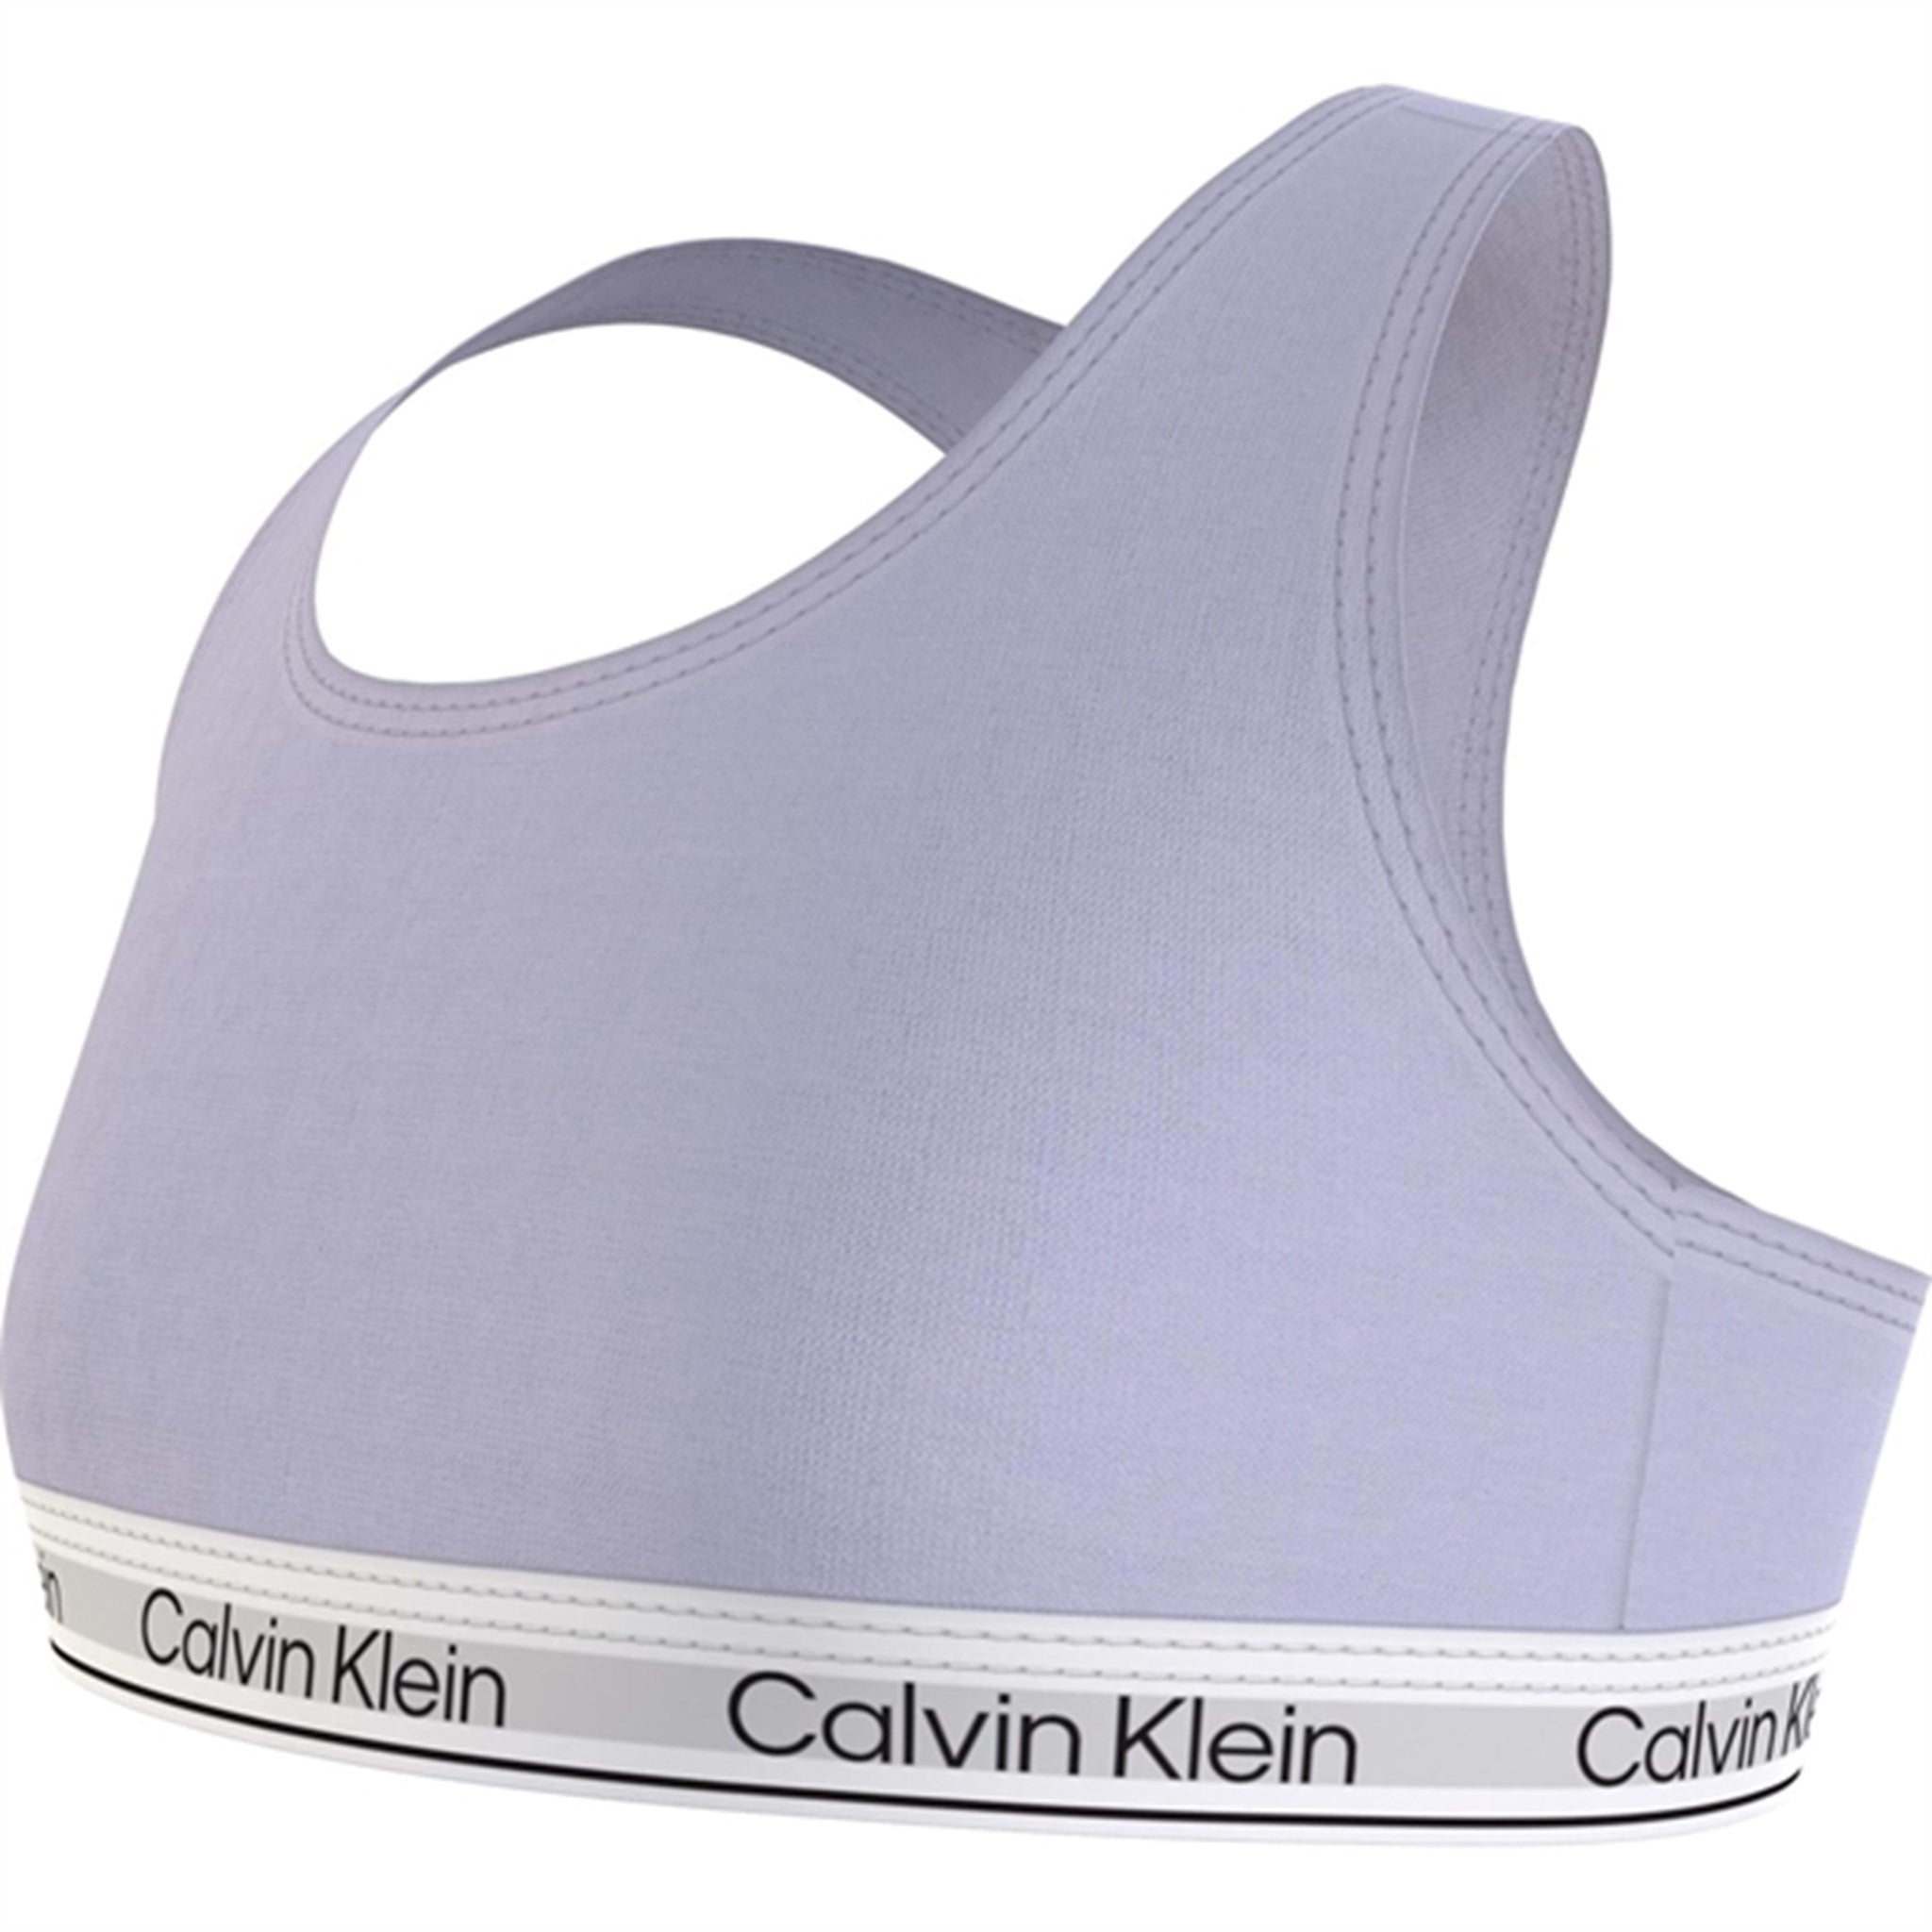 Calvin Klein Bralette 2-pak Lavendersplash/Pvh Black 2